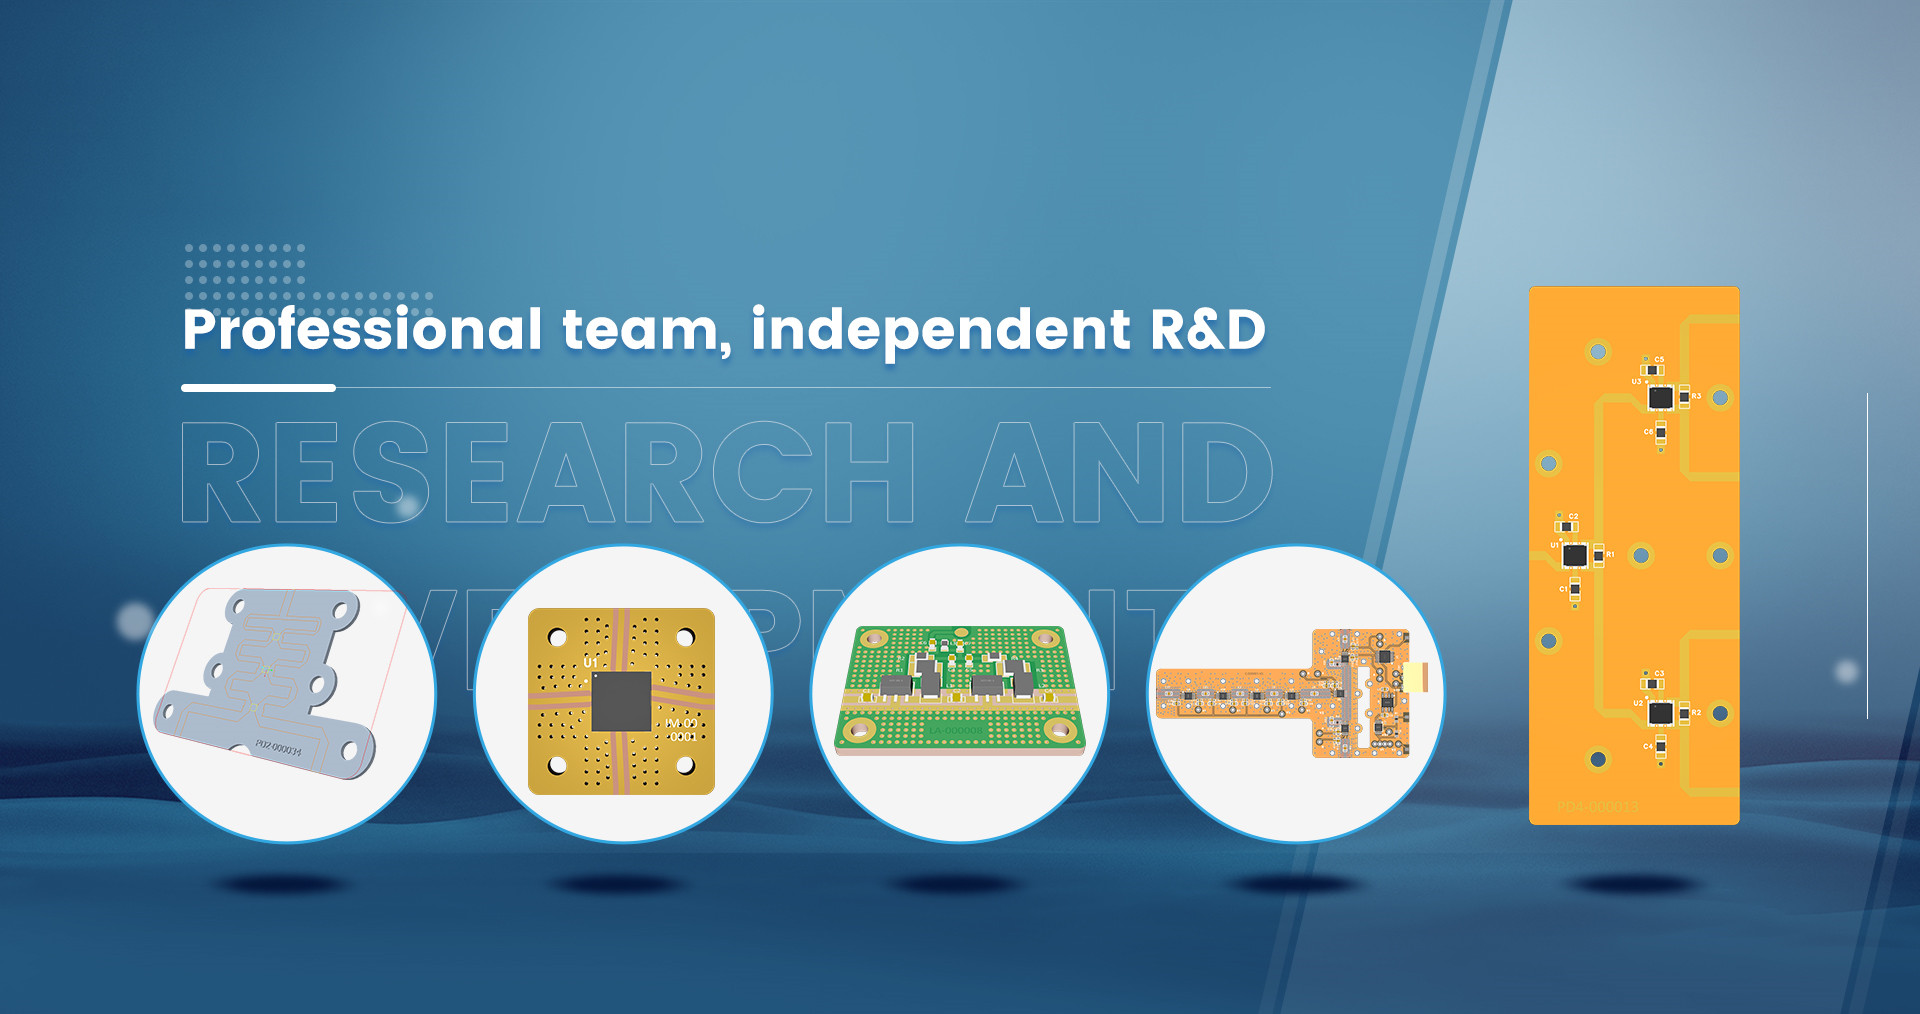 Professional team, independent R&D